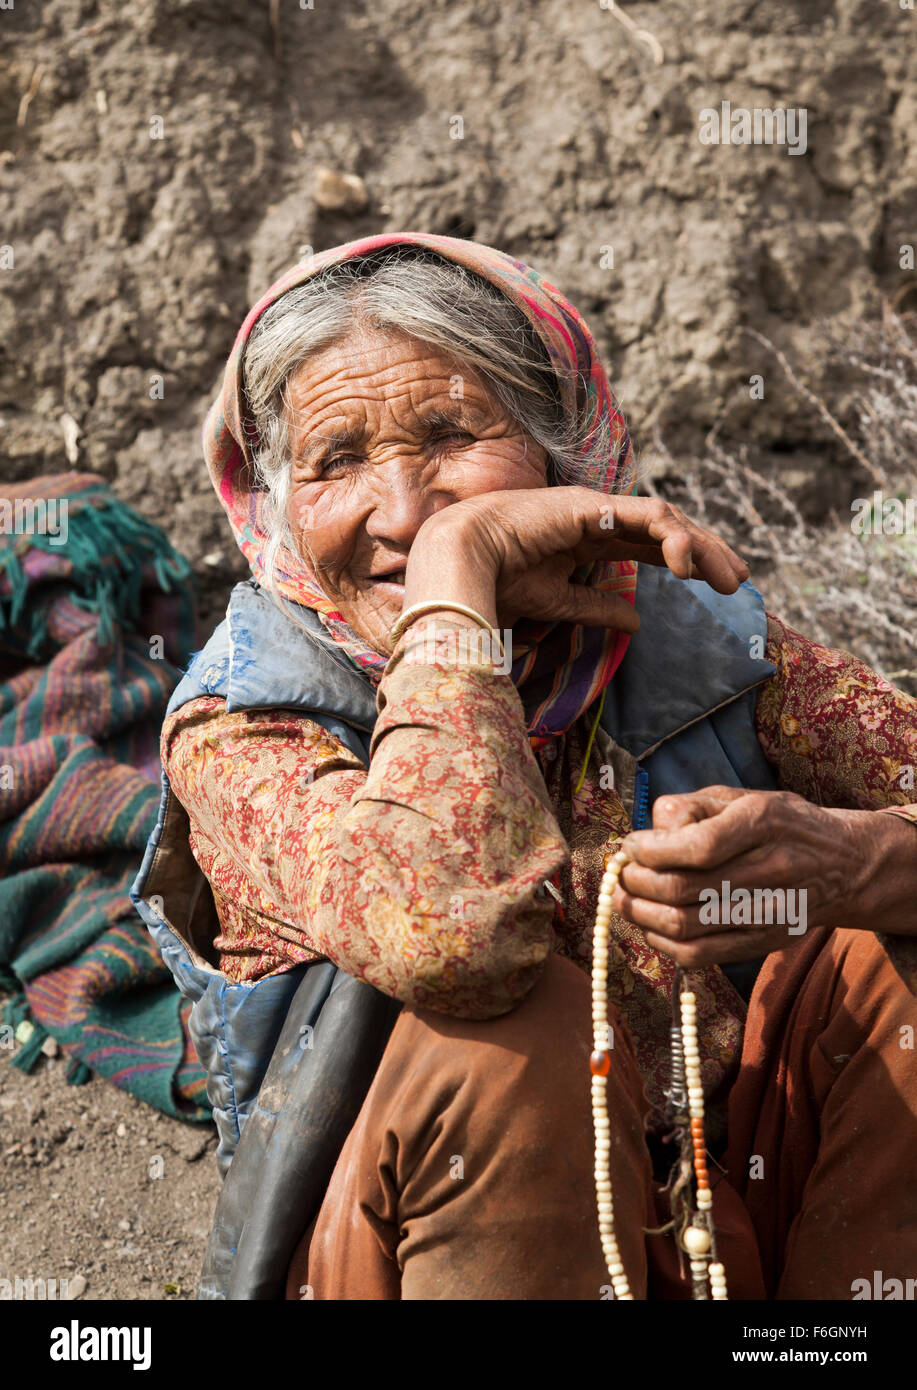 Image of Indian elderly woman wearing saree-CX227279-Picxy